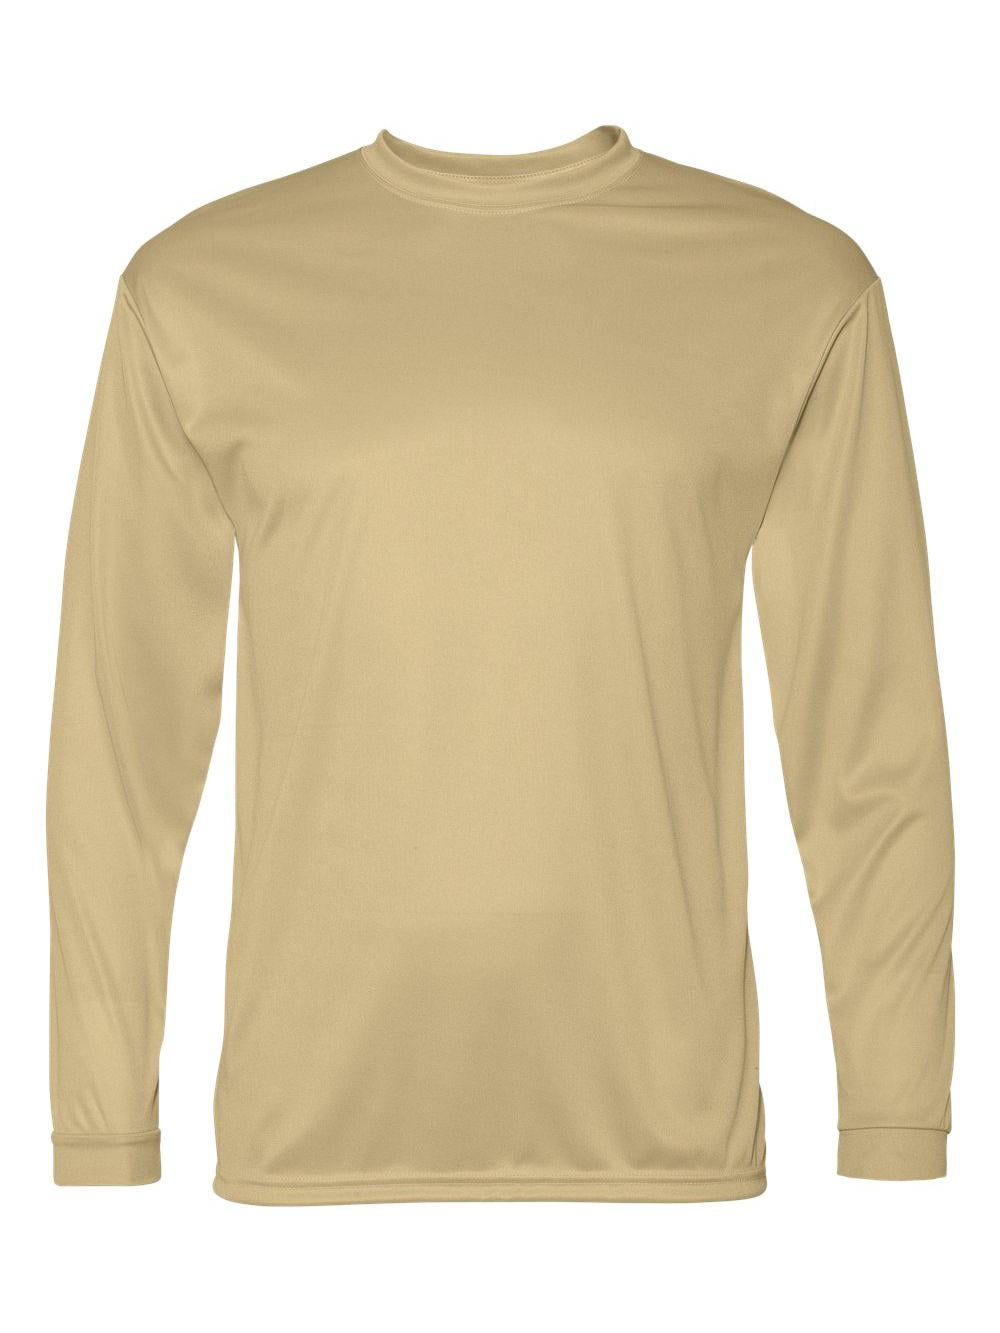 Boston College Long Sleeve T-Shirt | Champion Products | Vegas Gold | 2XLarge